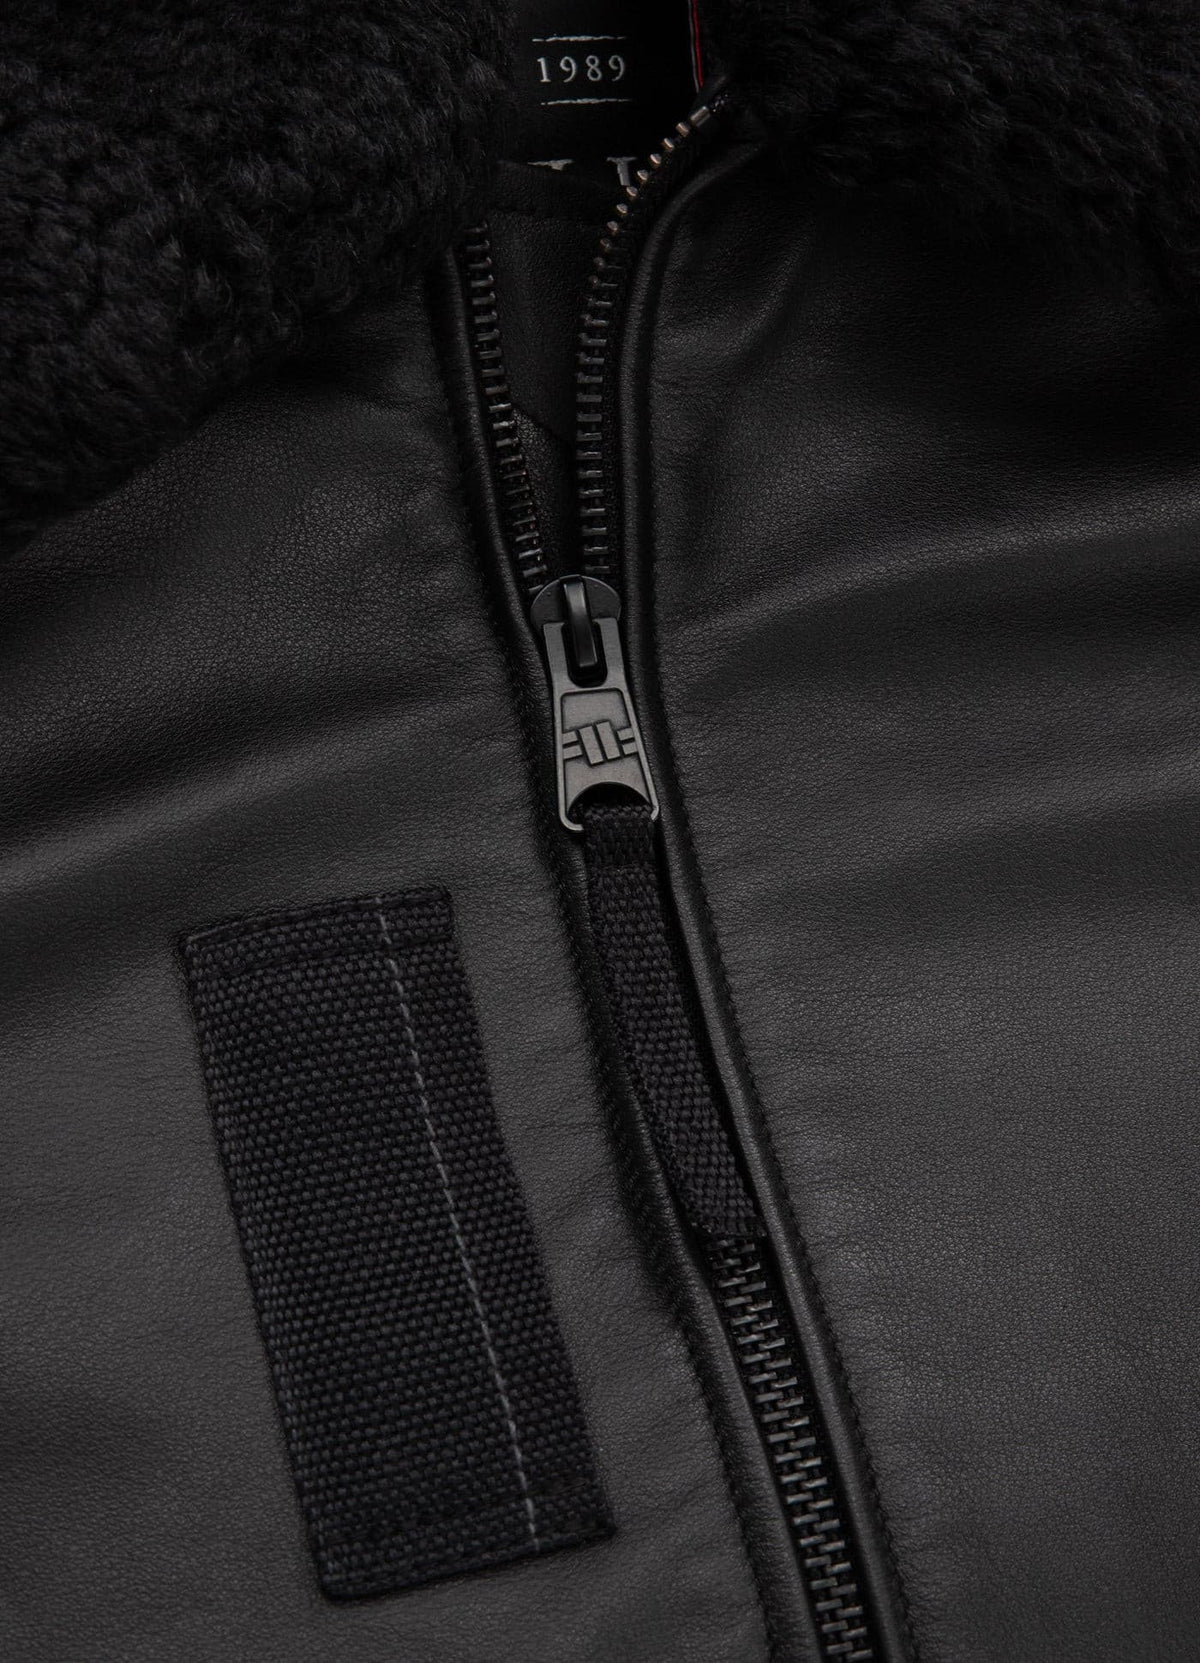 BRANDO Black Leather Jacket.